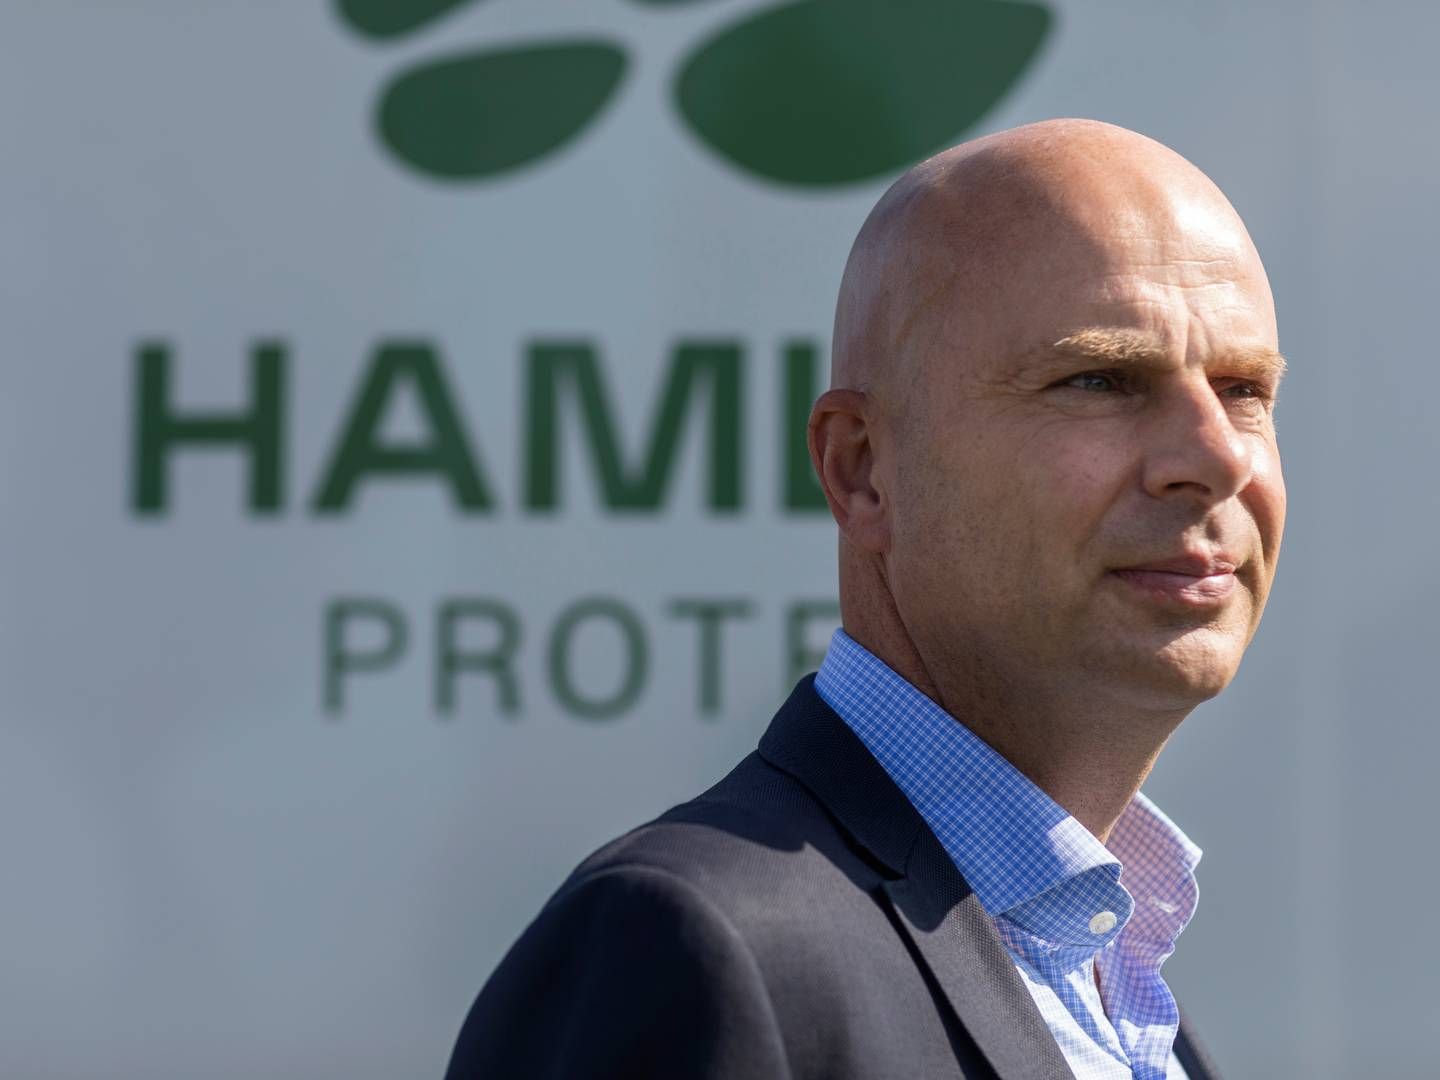 Hollænderen Erik Visser har siddet som adm. direktør i Hamlet Protein siden 2019. | Foto: Hamlet Protein / Pr